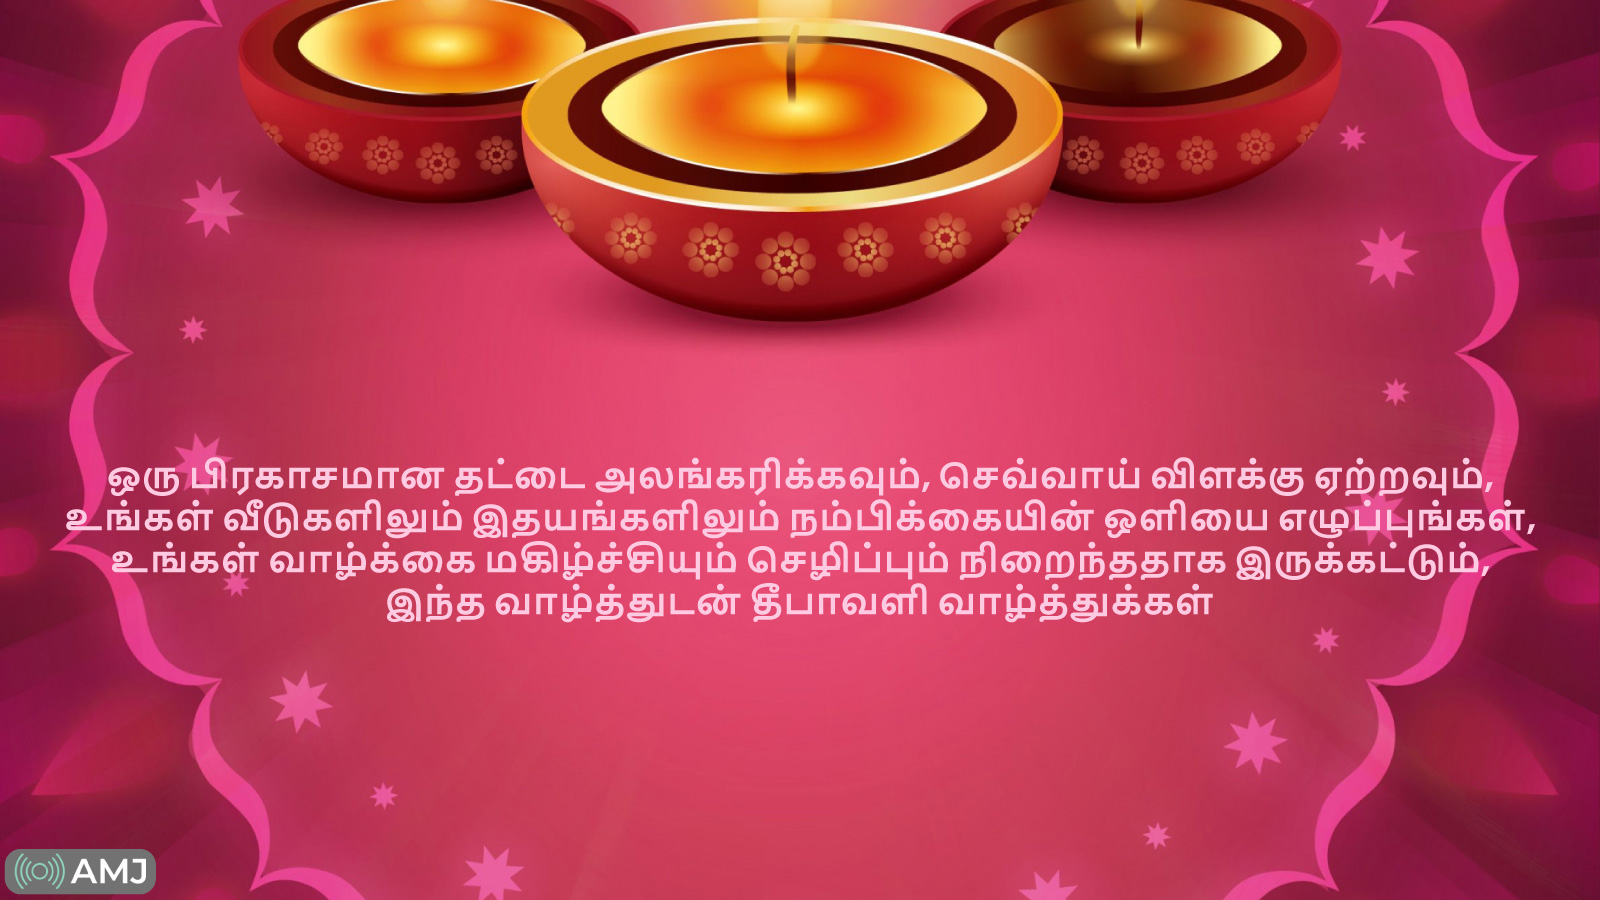 Deepavali Message in Tamil